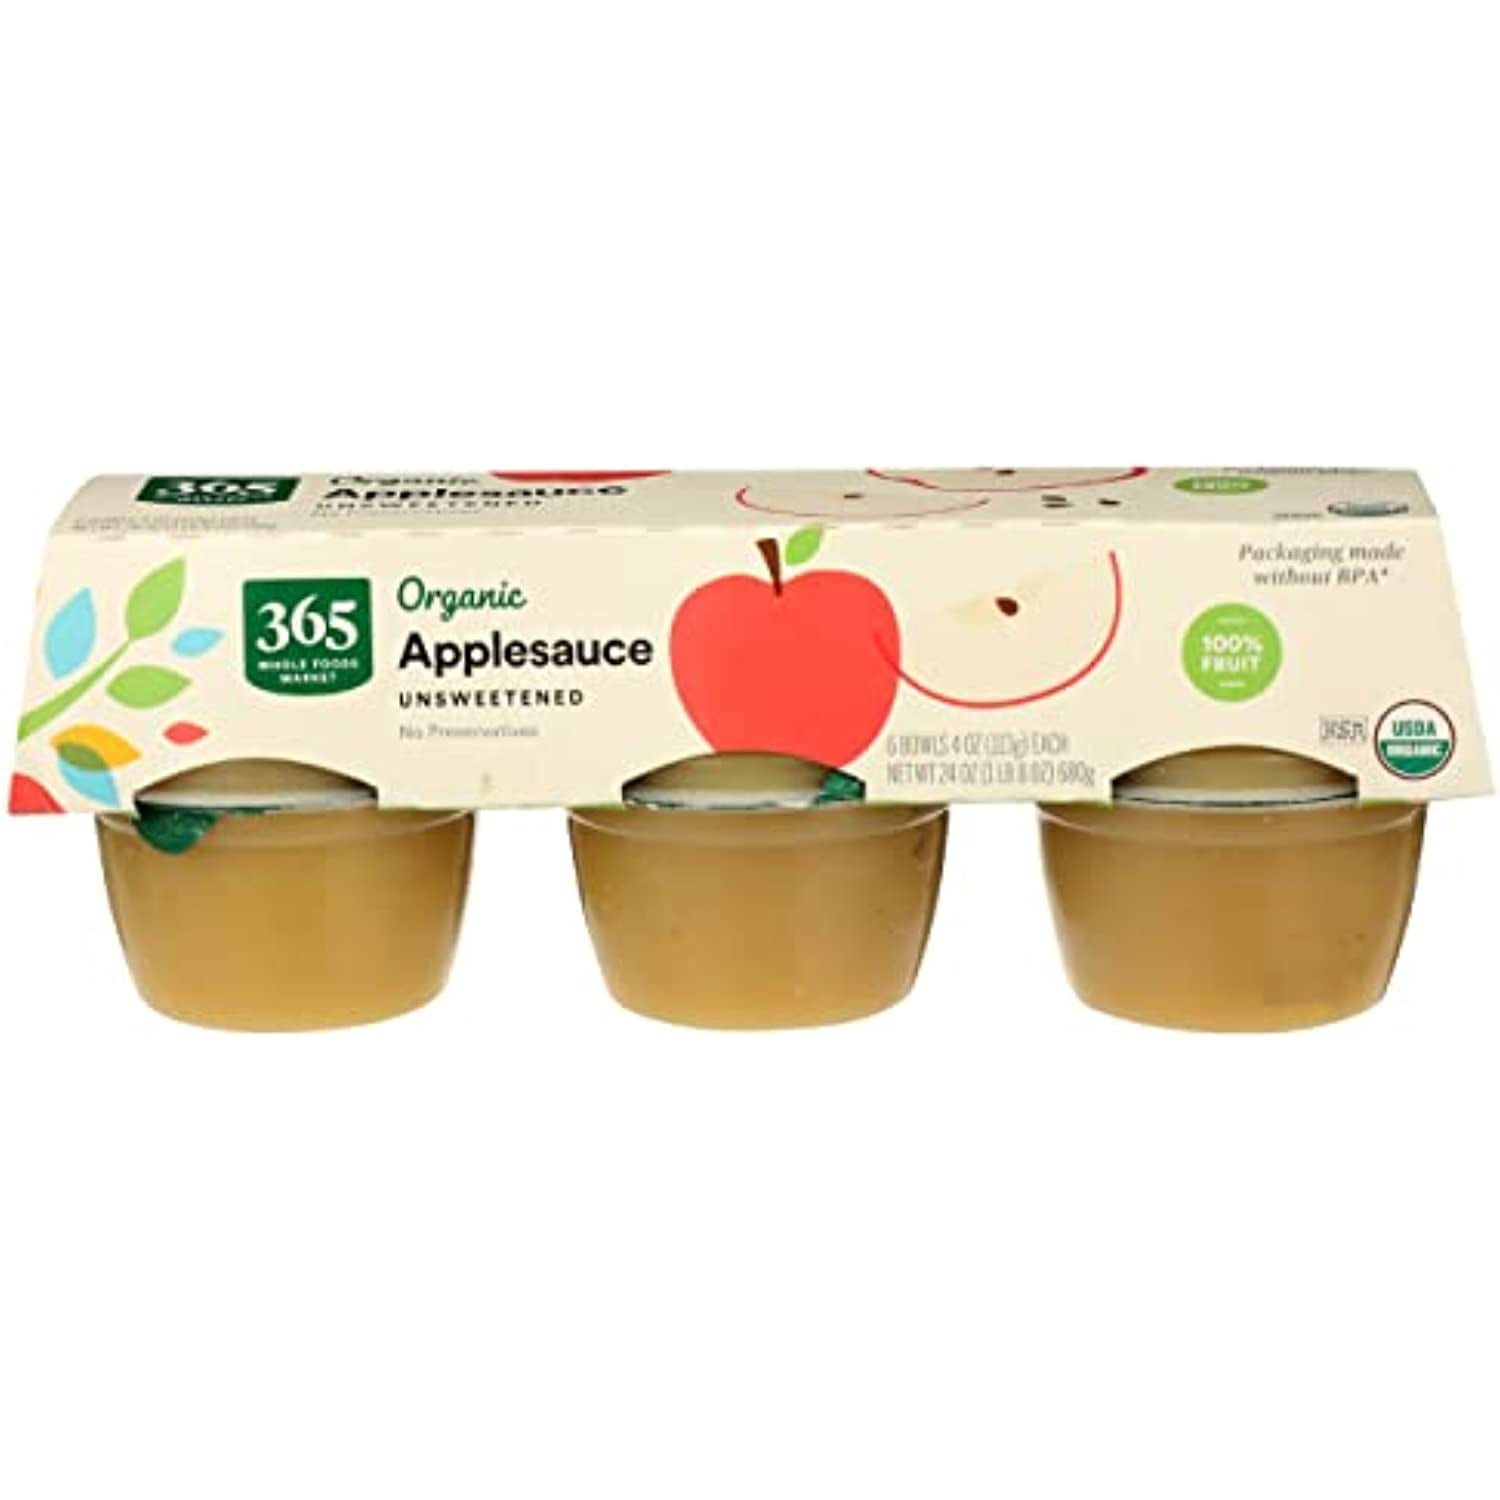 Organic Minneiska SweeTango Apple at Whole Foods Market